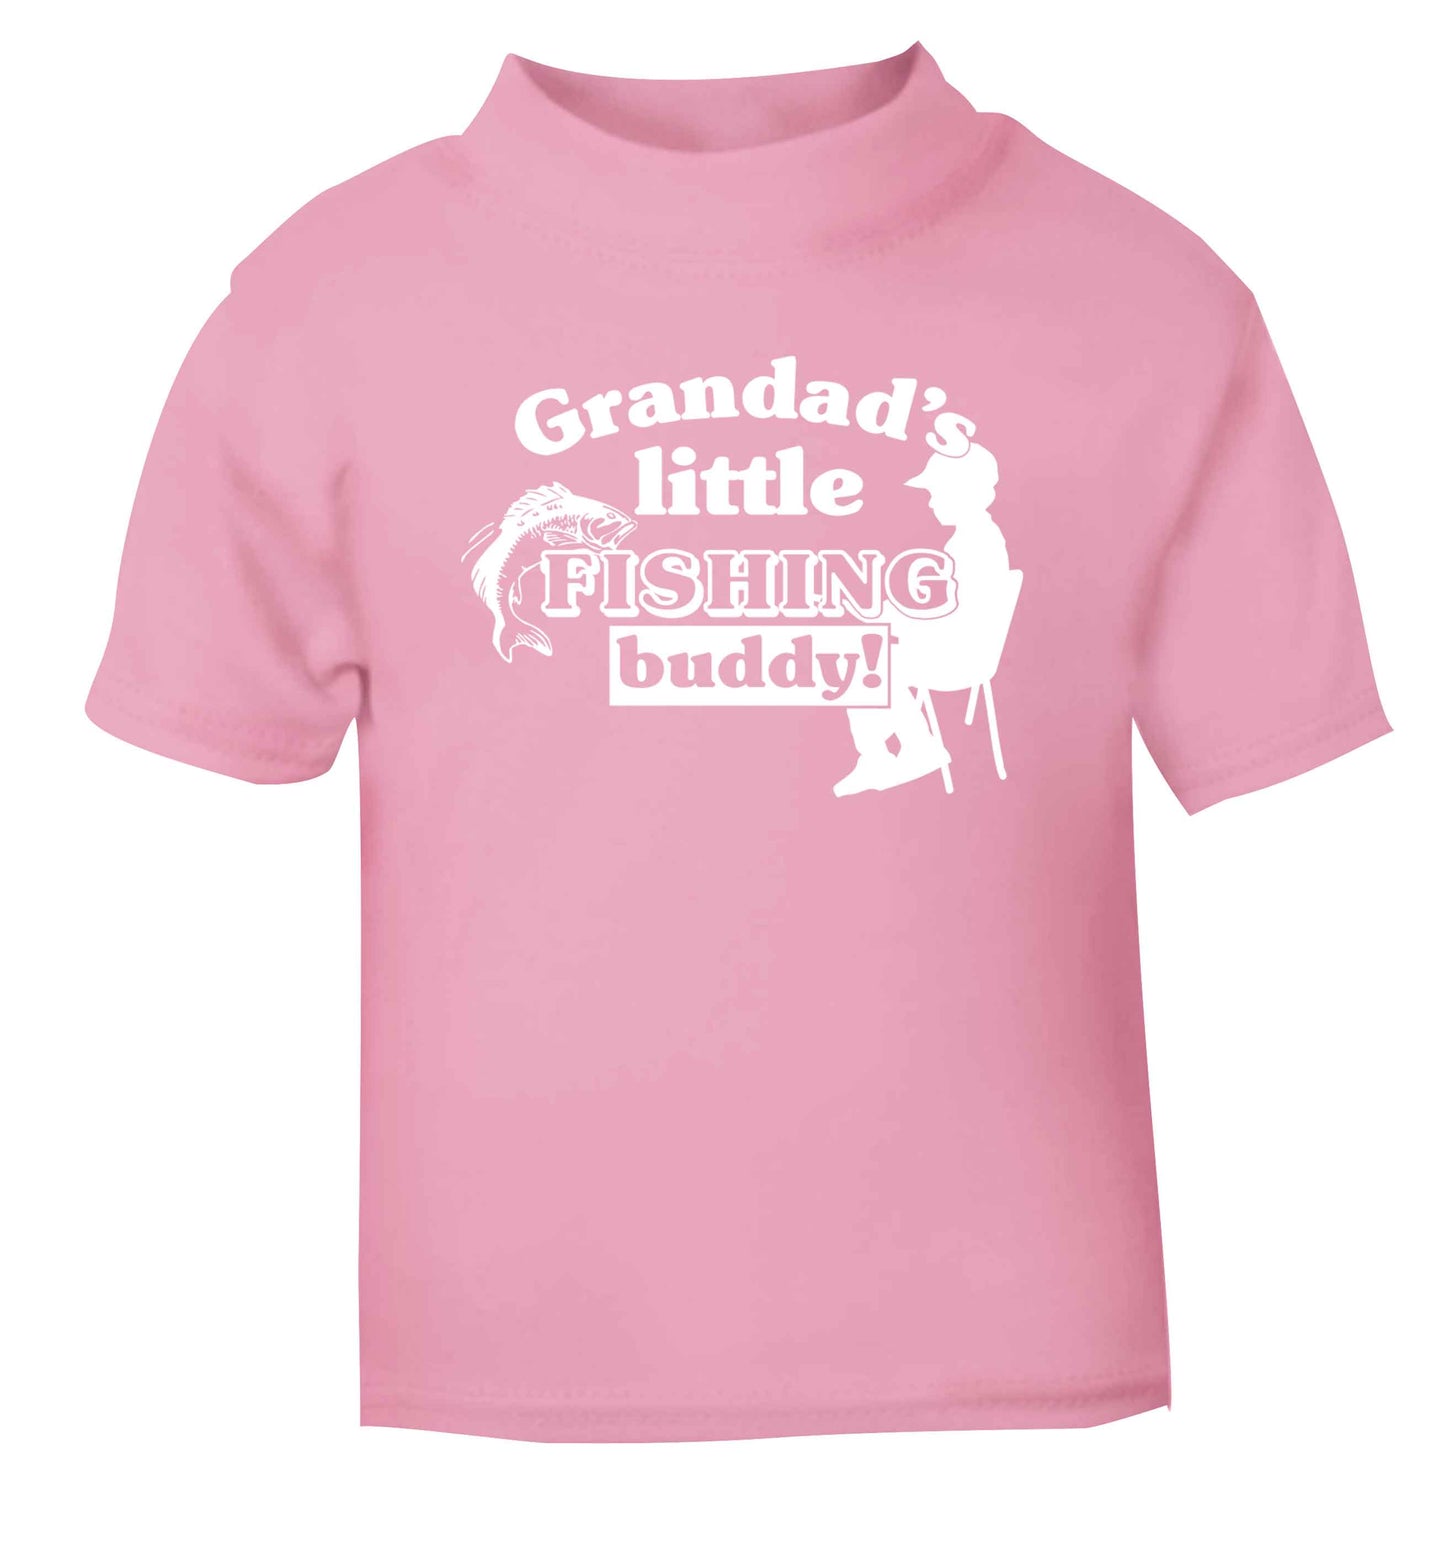 Grandad's little fishing buddy! light pink Baby Toddler Tshirt 2 Years